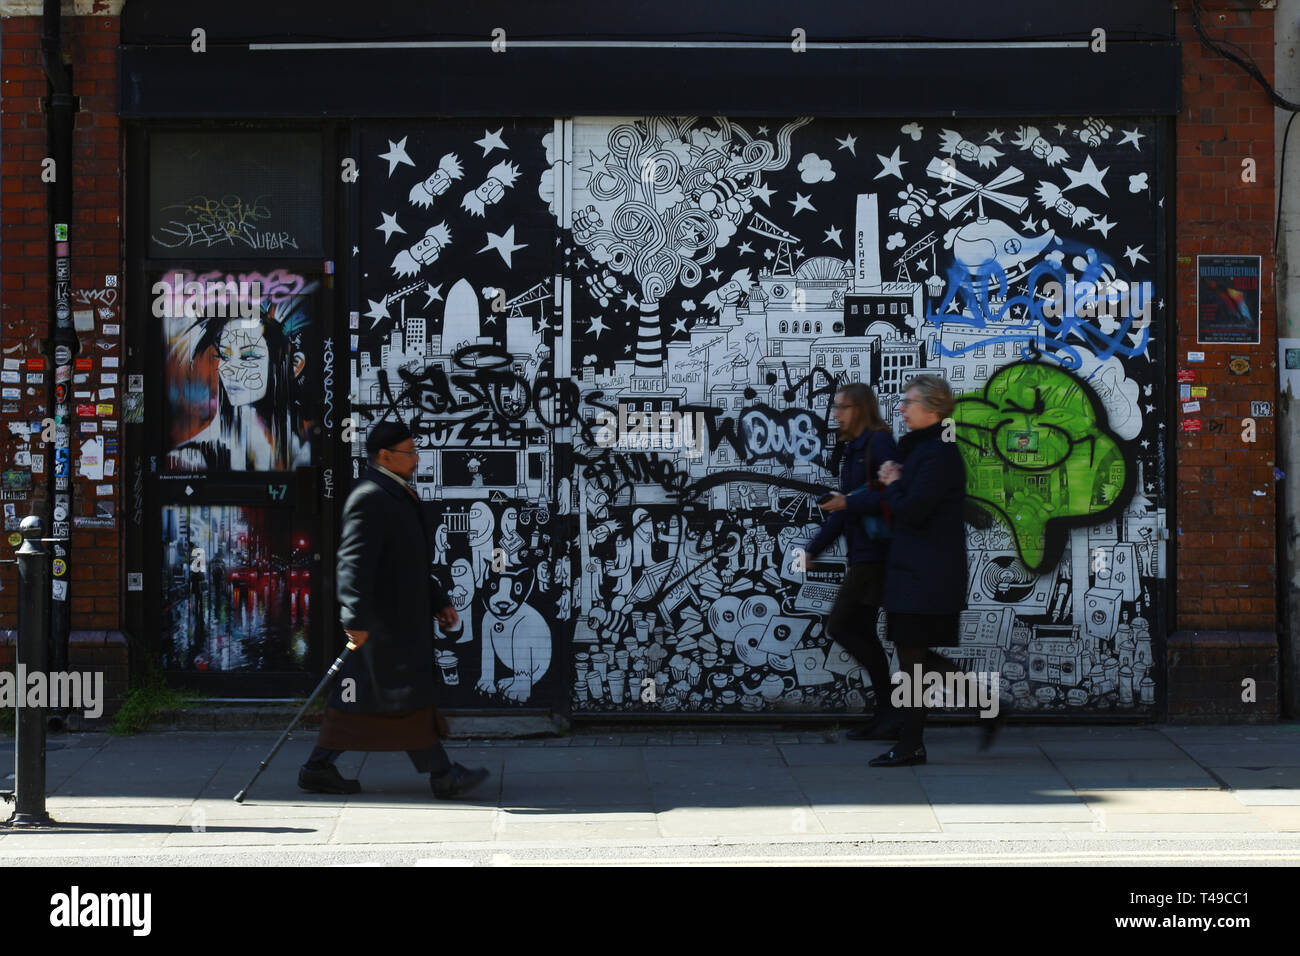 People multiracial walking in front of a street art wall, Brick lane, Spitalfields, London, United Kingdom Stock Photo